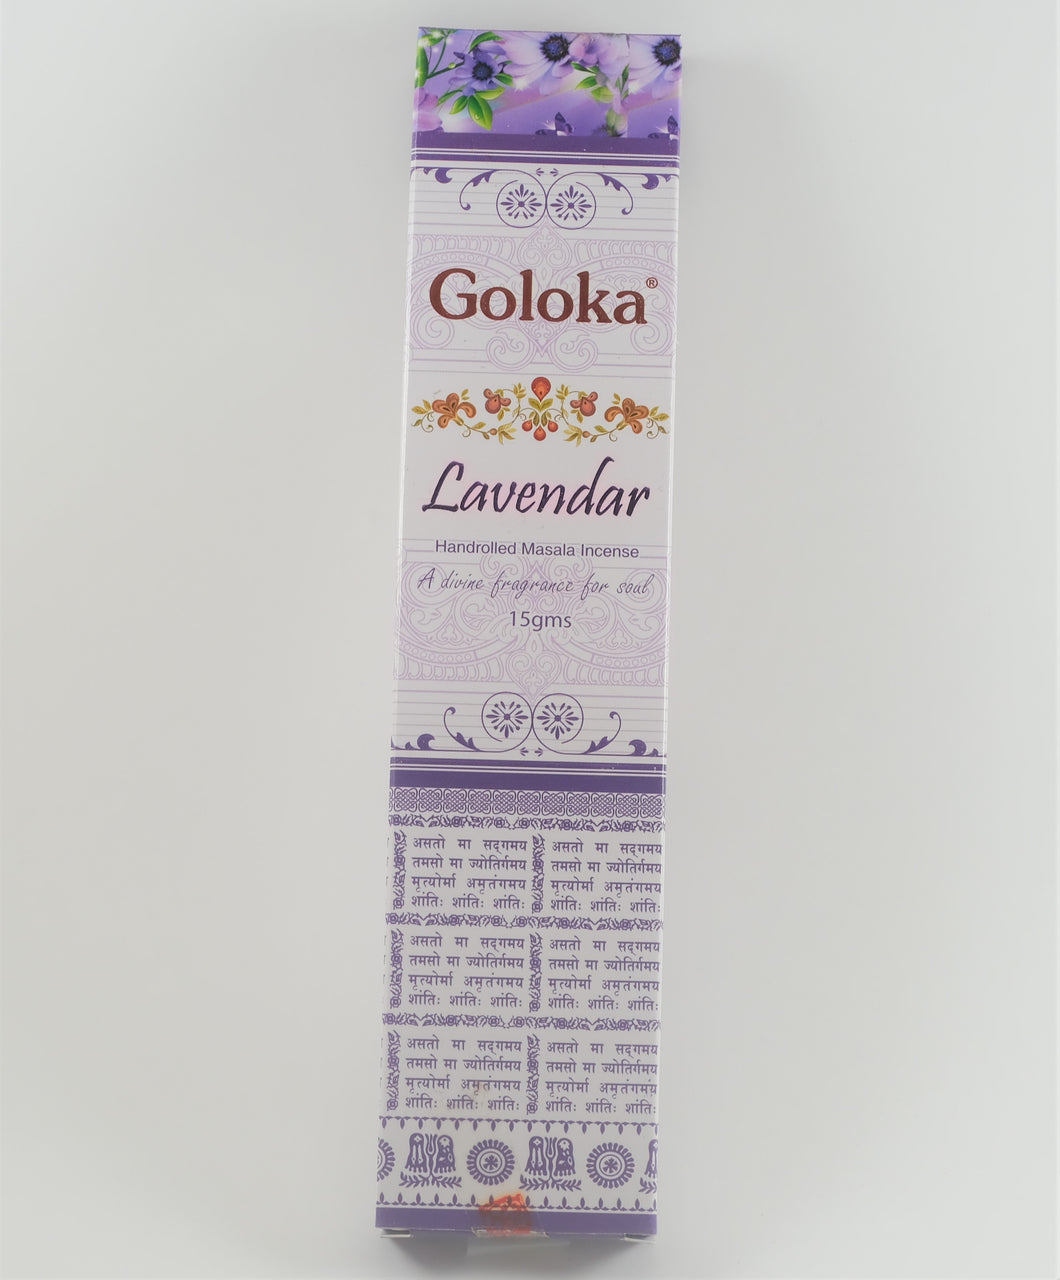 Goloka Lavendar - 15g